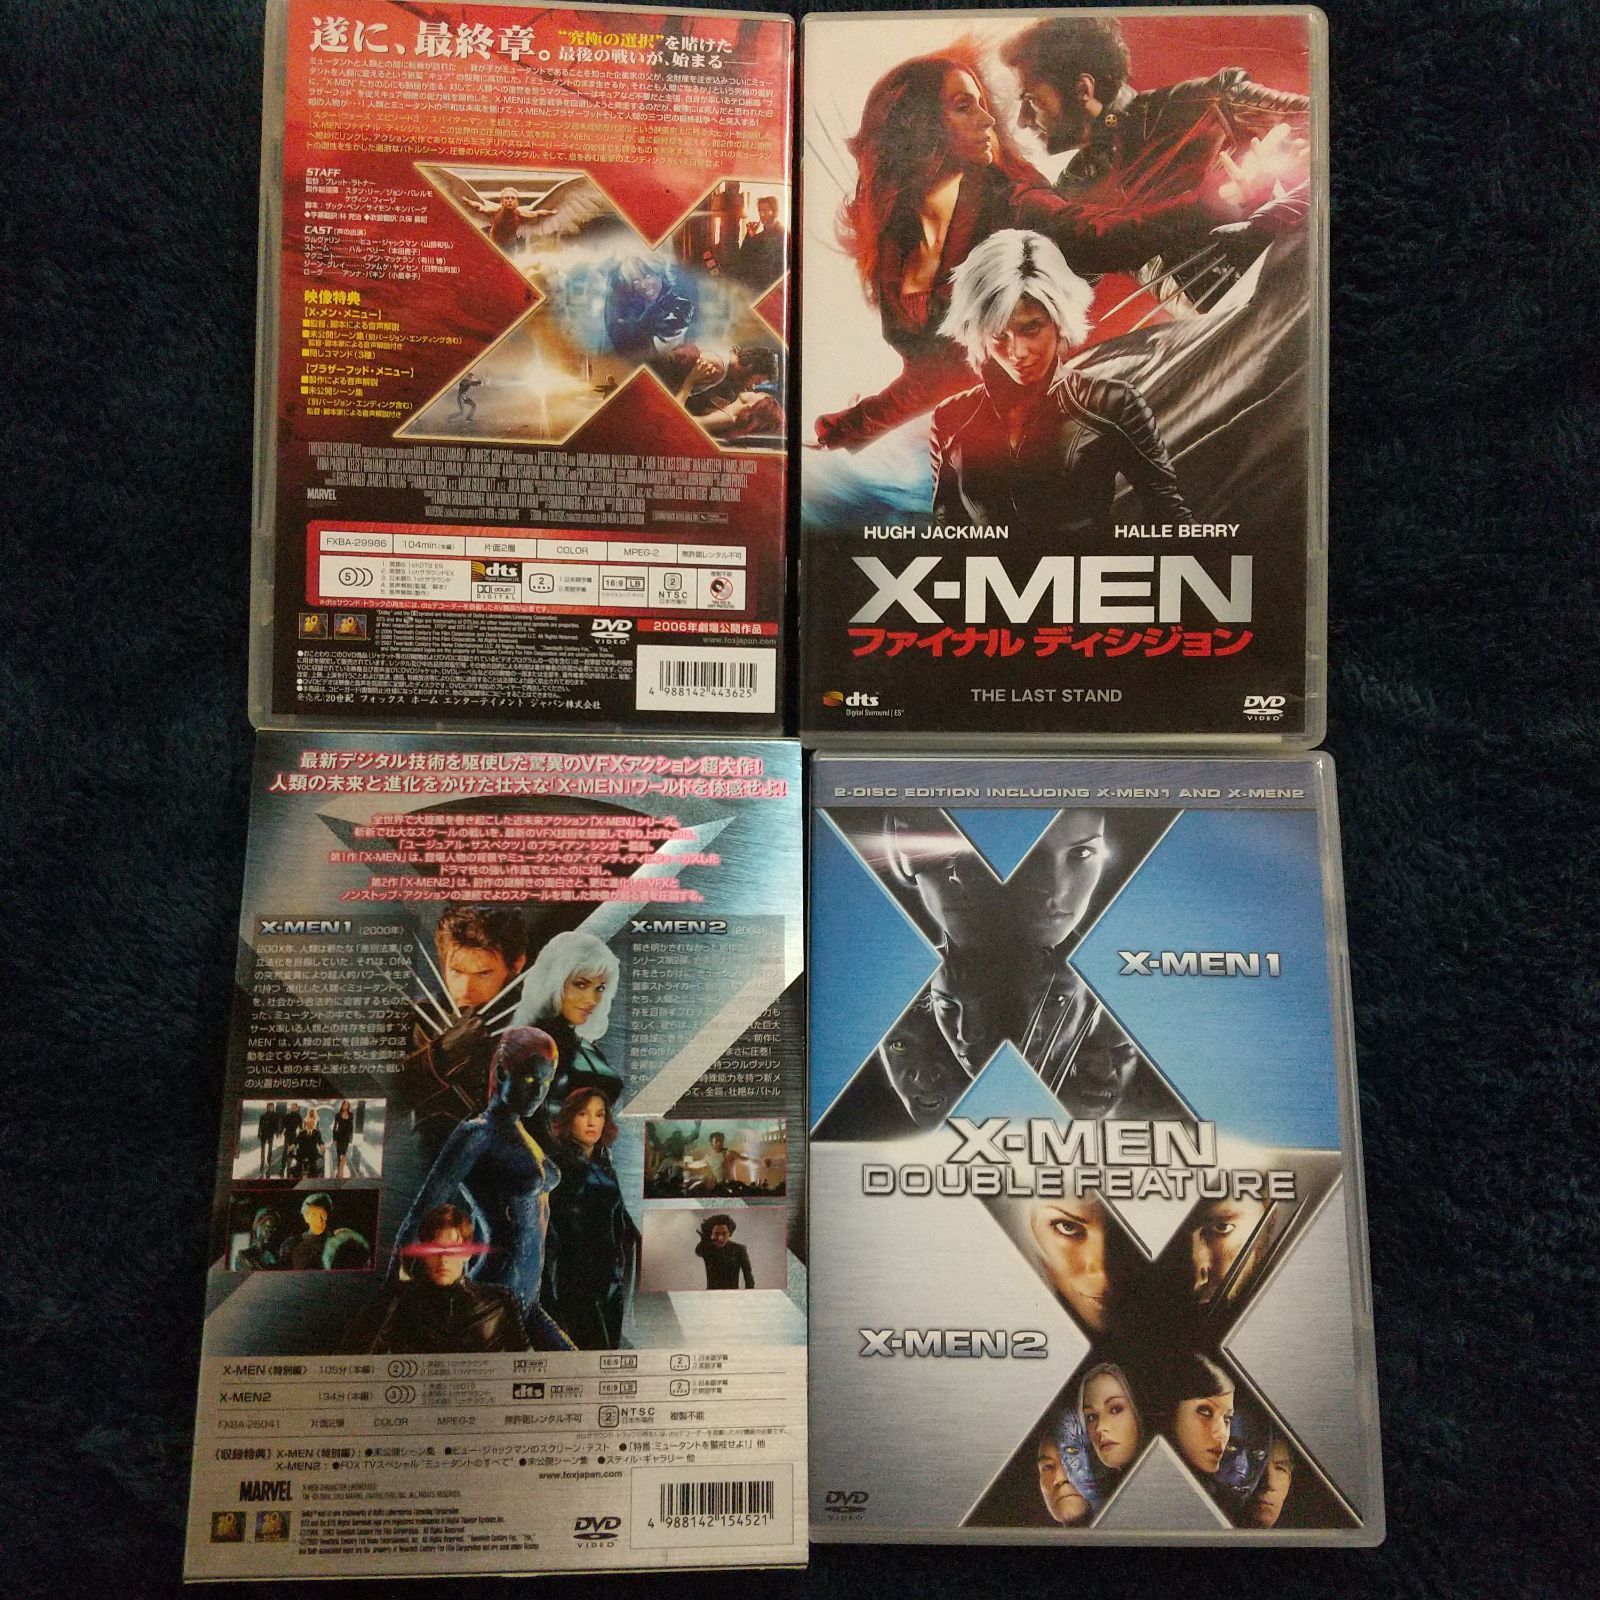 X-MEN12 DVDダブルパック〈初回生産限定・2枚組〉 - ブルーレイ